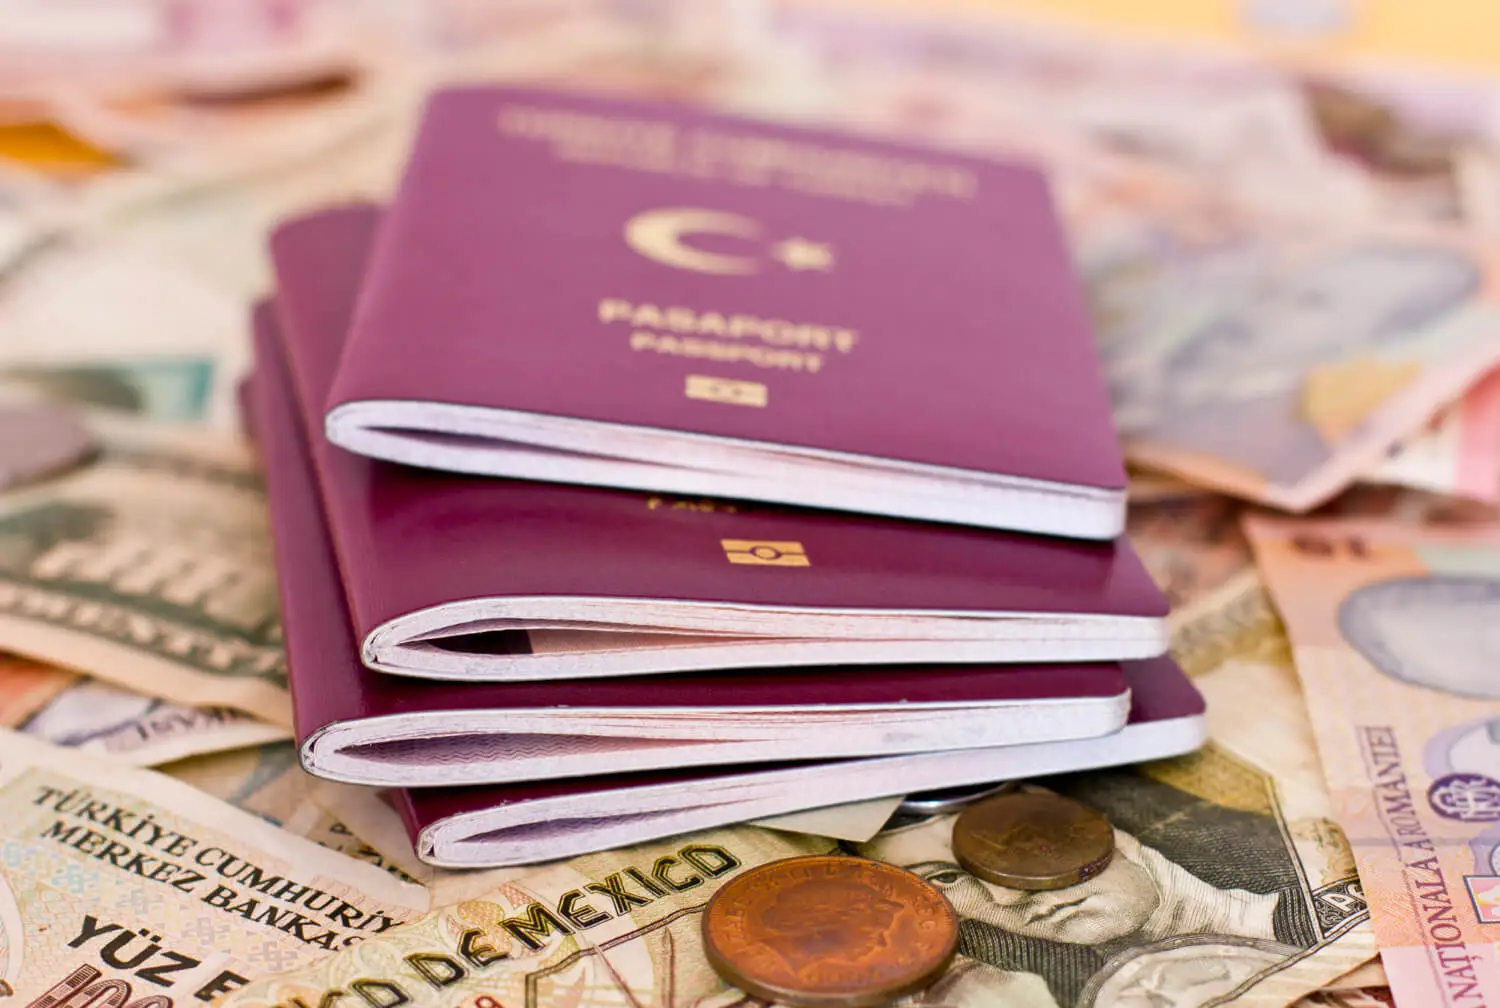 Passport and Money images